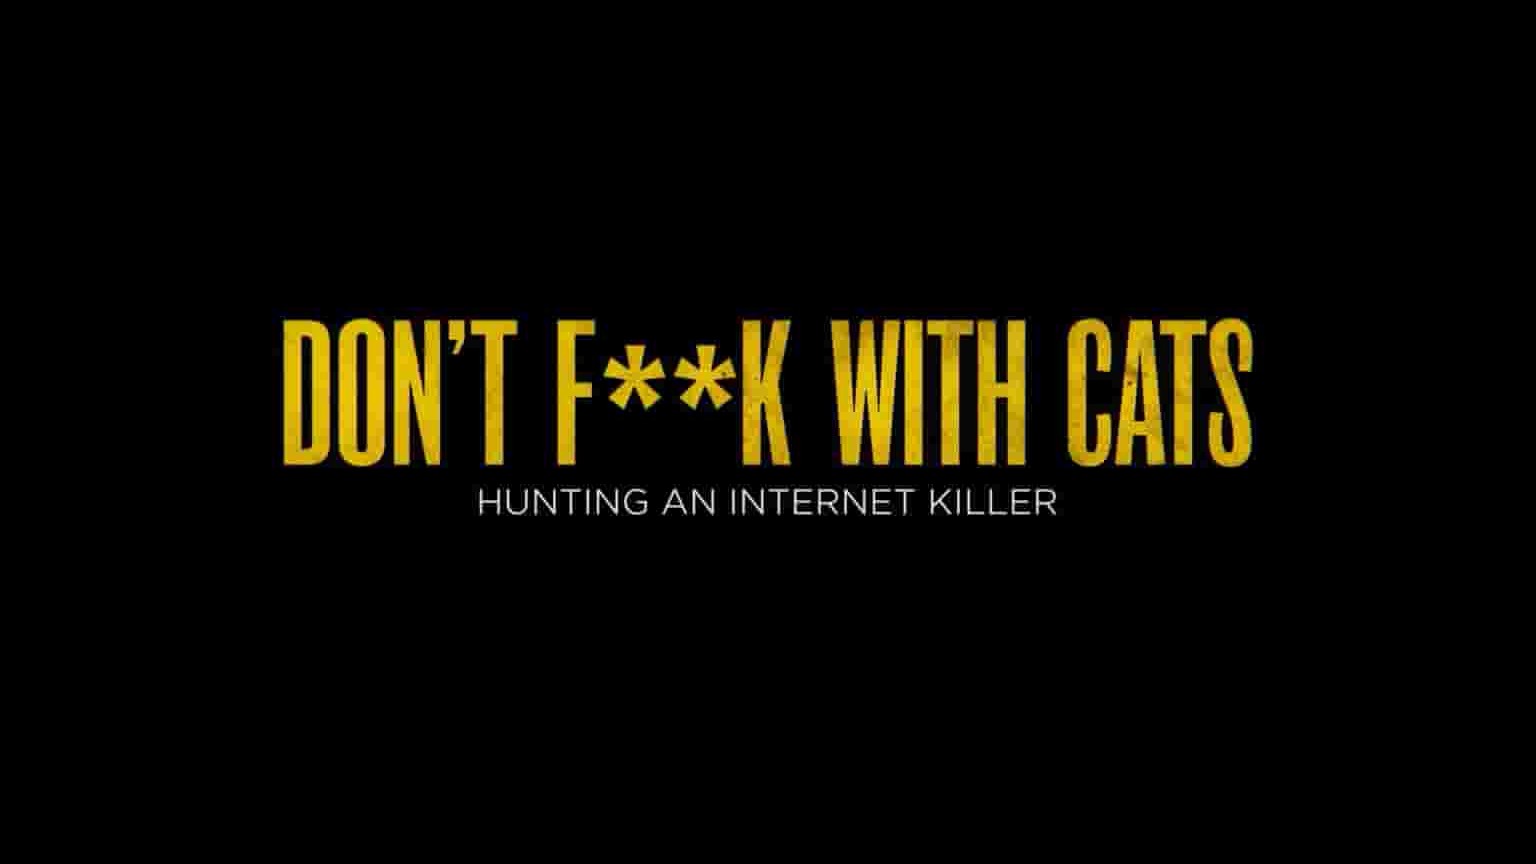 Netflix纪录片《猫不可杀不可辱.网络杀手大搜捕 Don